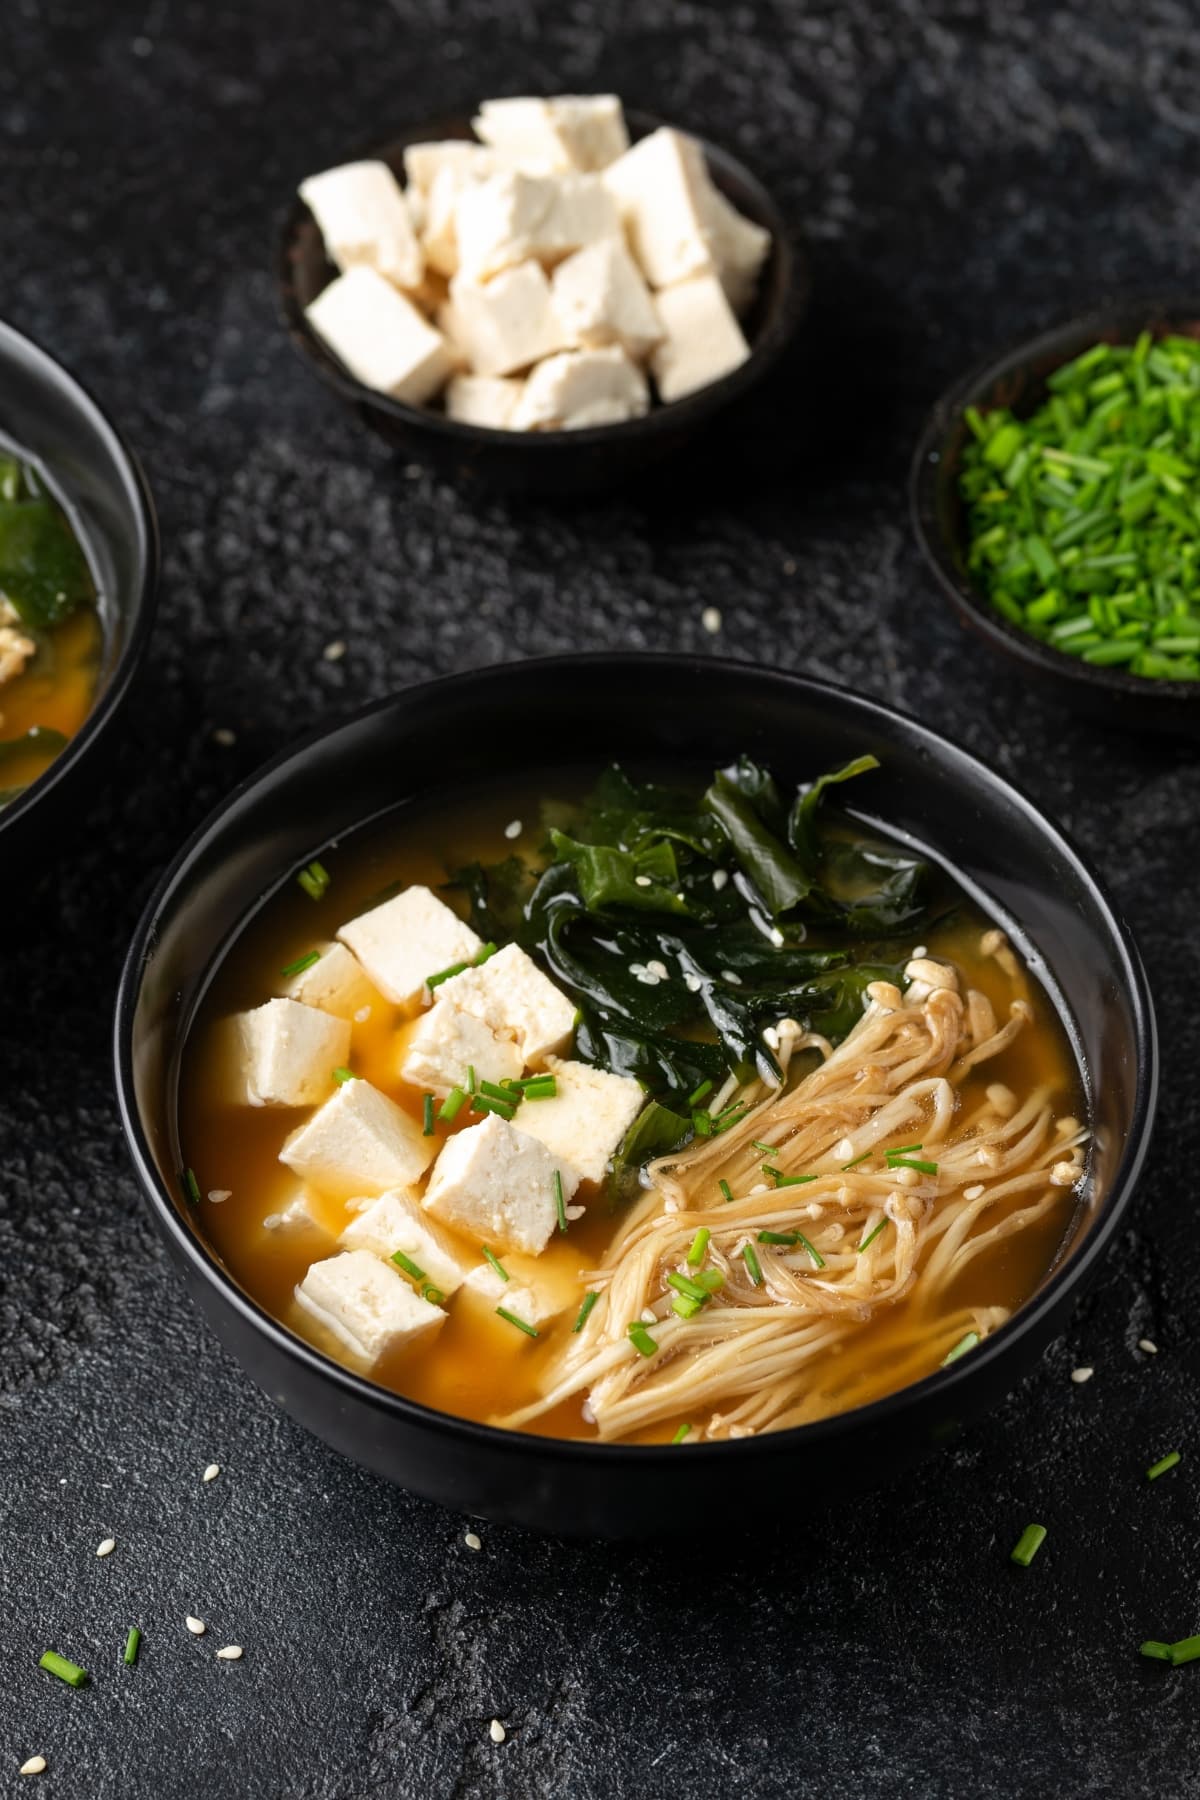 Rich miso soup with enoki mushrooms, tofu and seaweeds